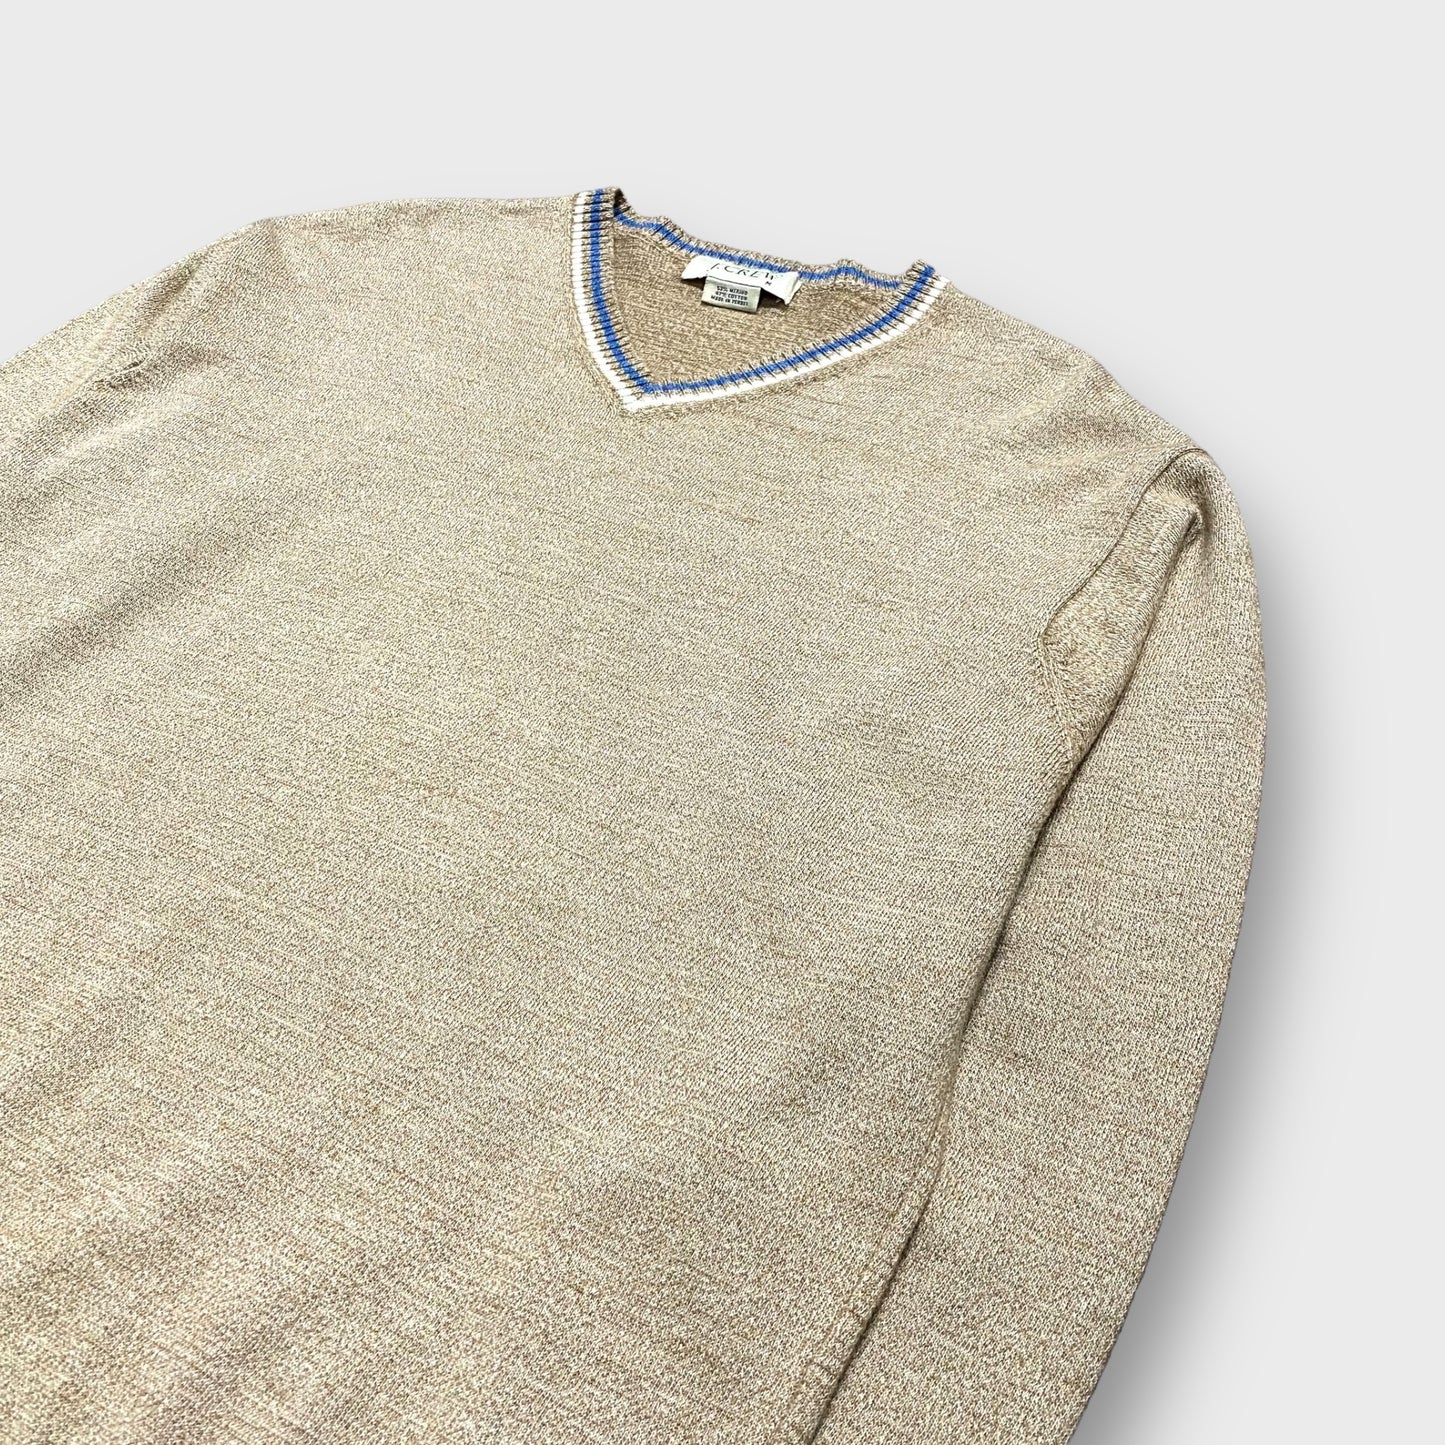 00's "J.CREW" Brown color v-neck knit sweater